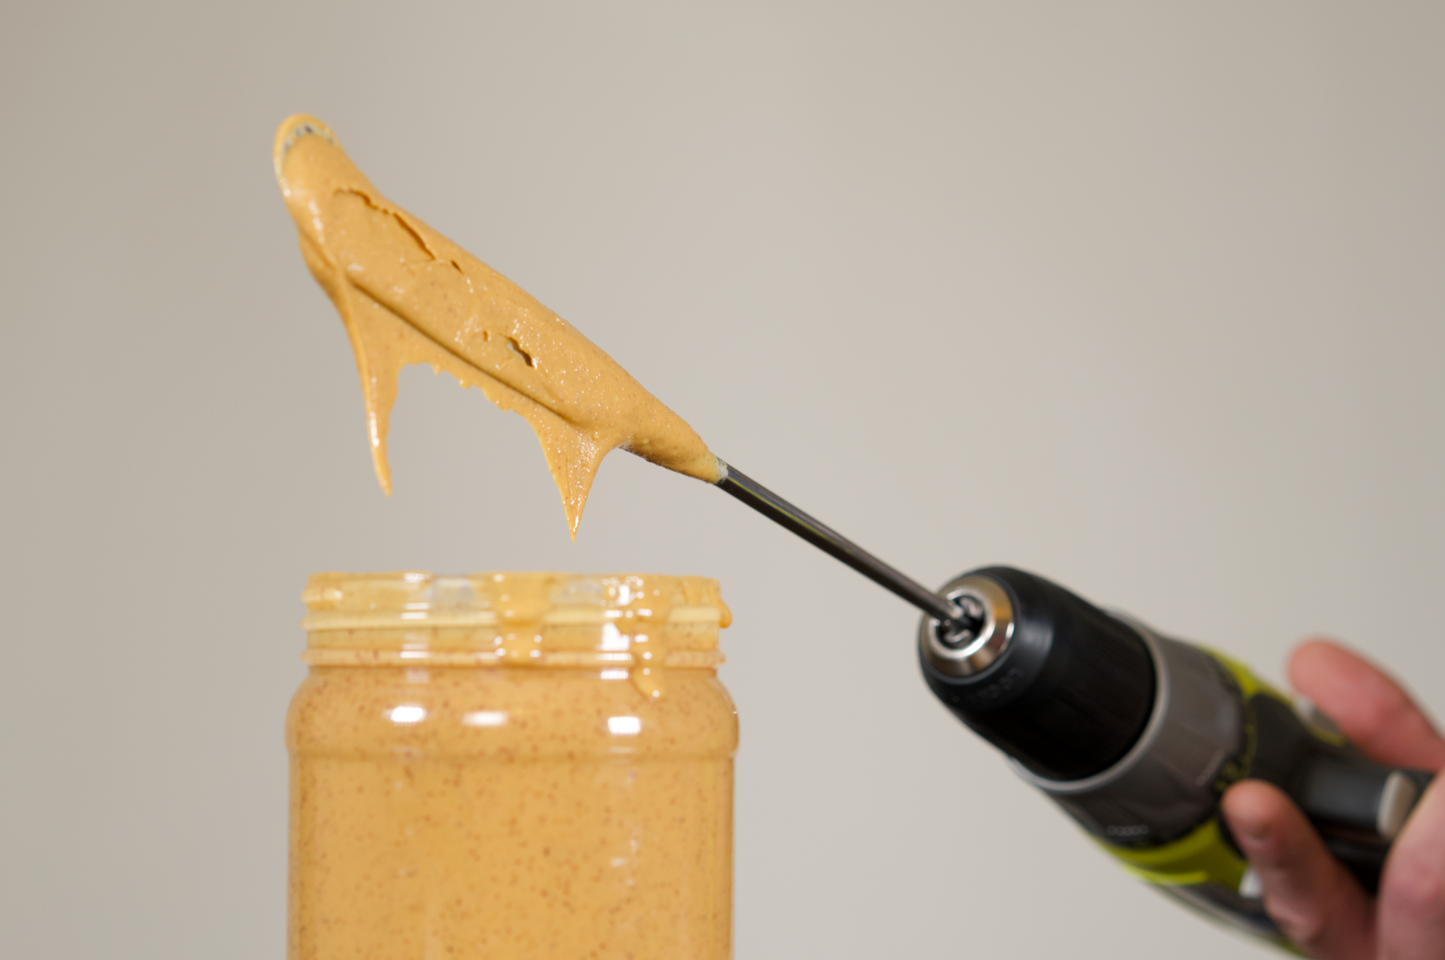 EZPB's Peanut Butter Mixer Makes It Easier to Stir Your Nut Butter